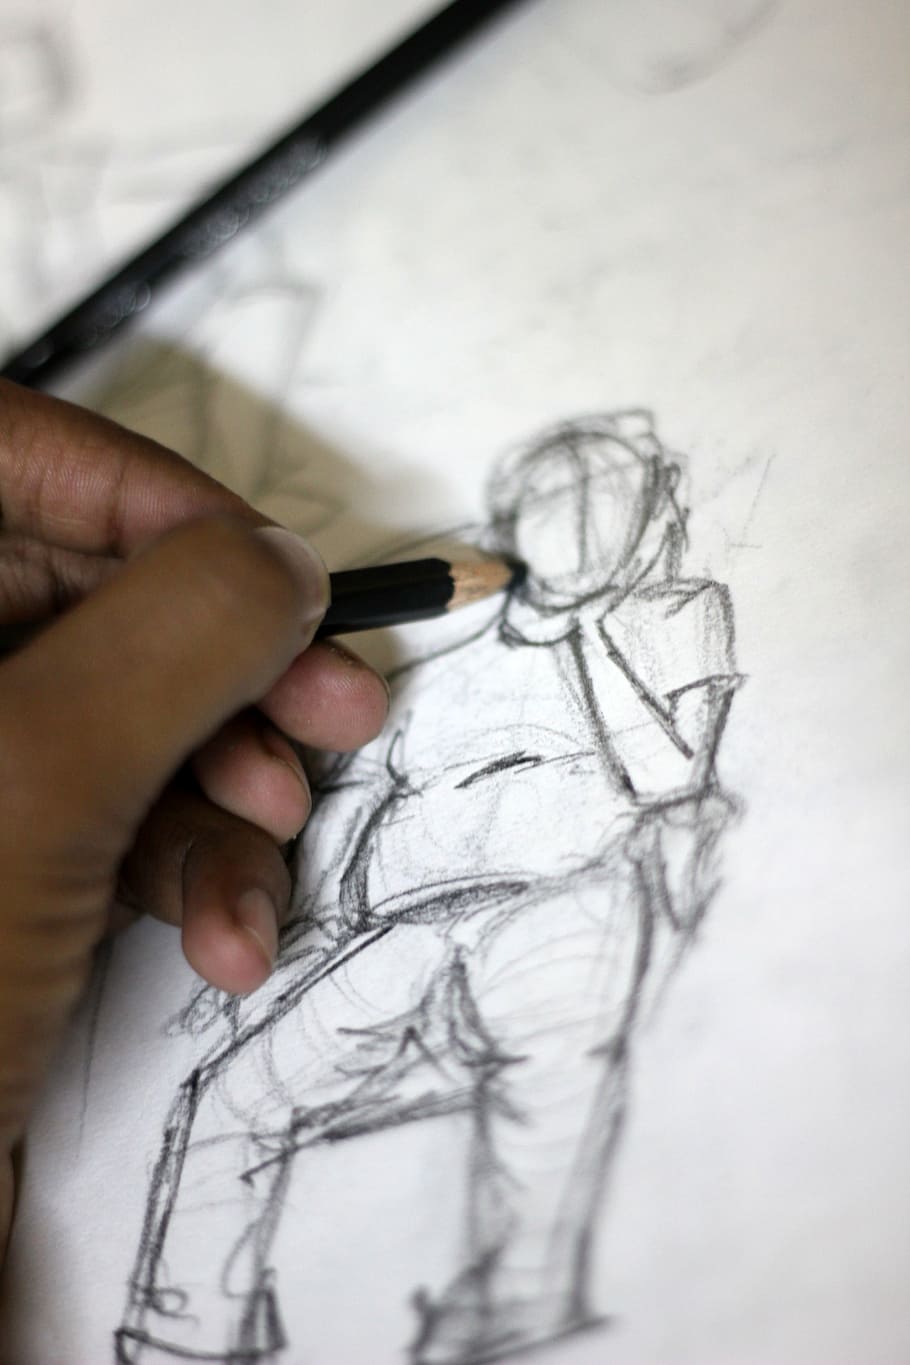 artist, sketching, portrait, pencil, drawing, sketch, art, draw, design, human hand